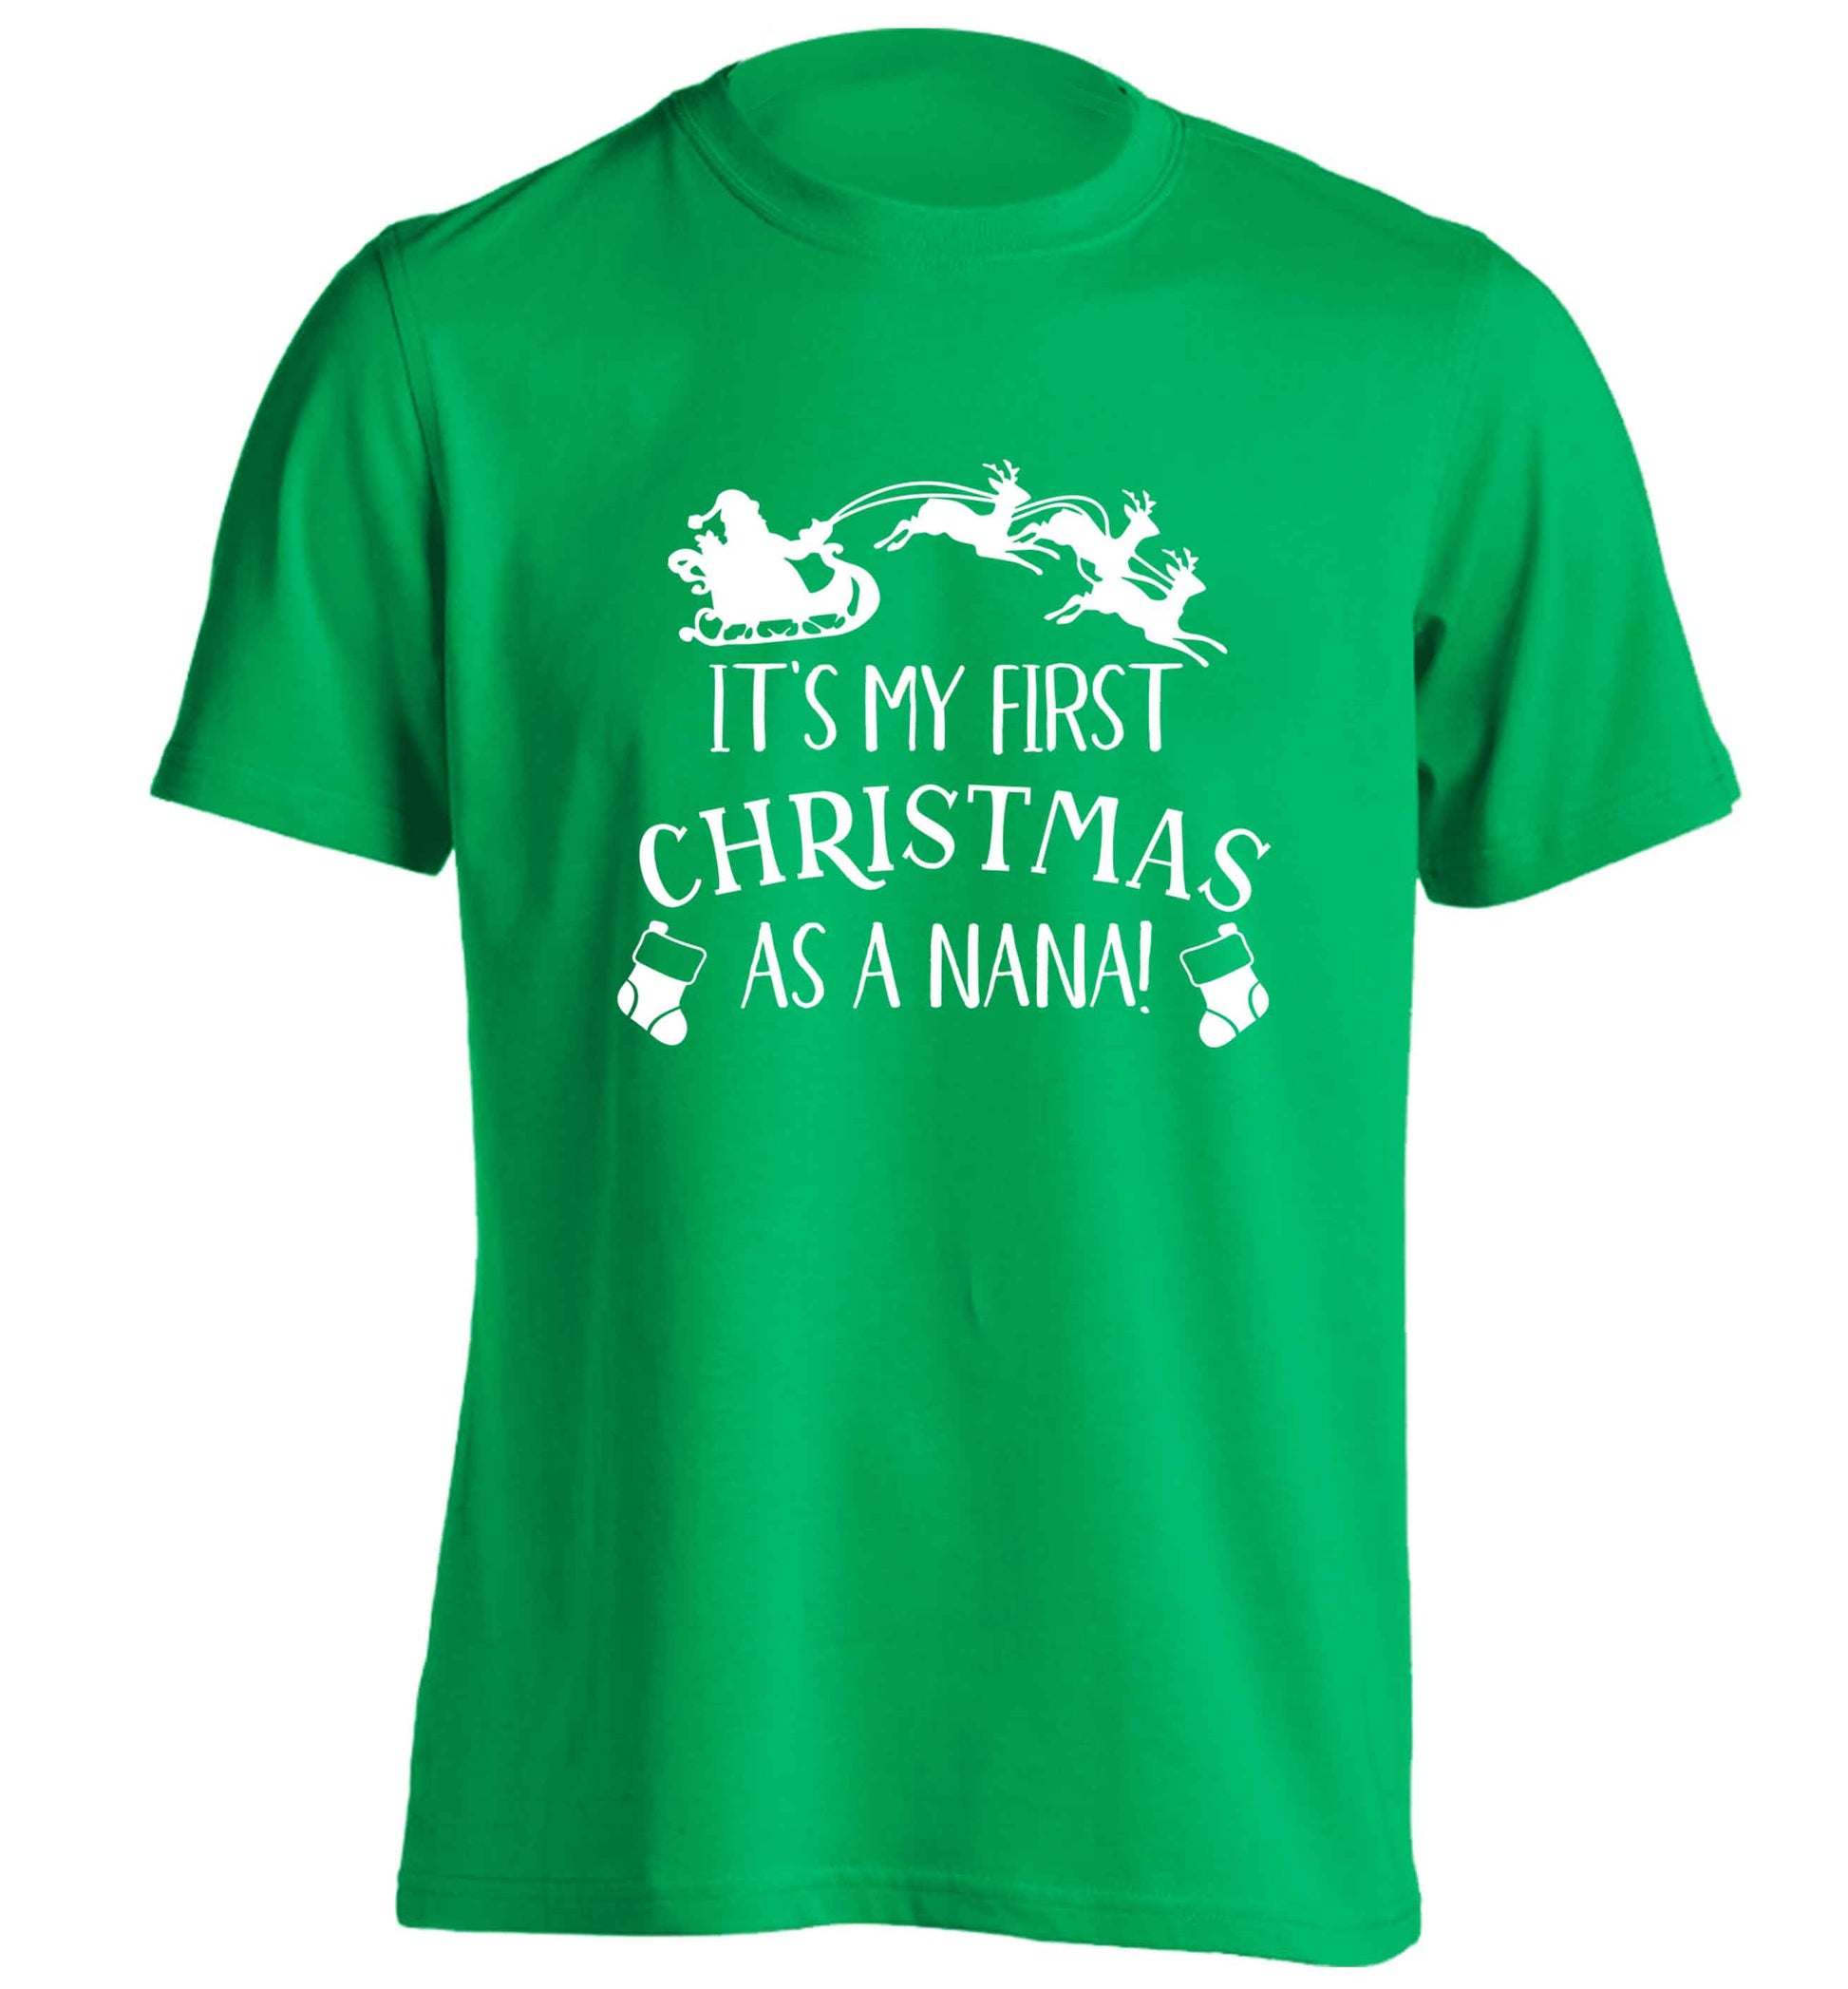 It's my first Christmas as a nana adults unisex green Tshirt 2XL